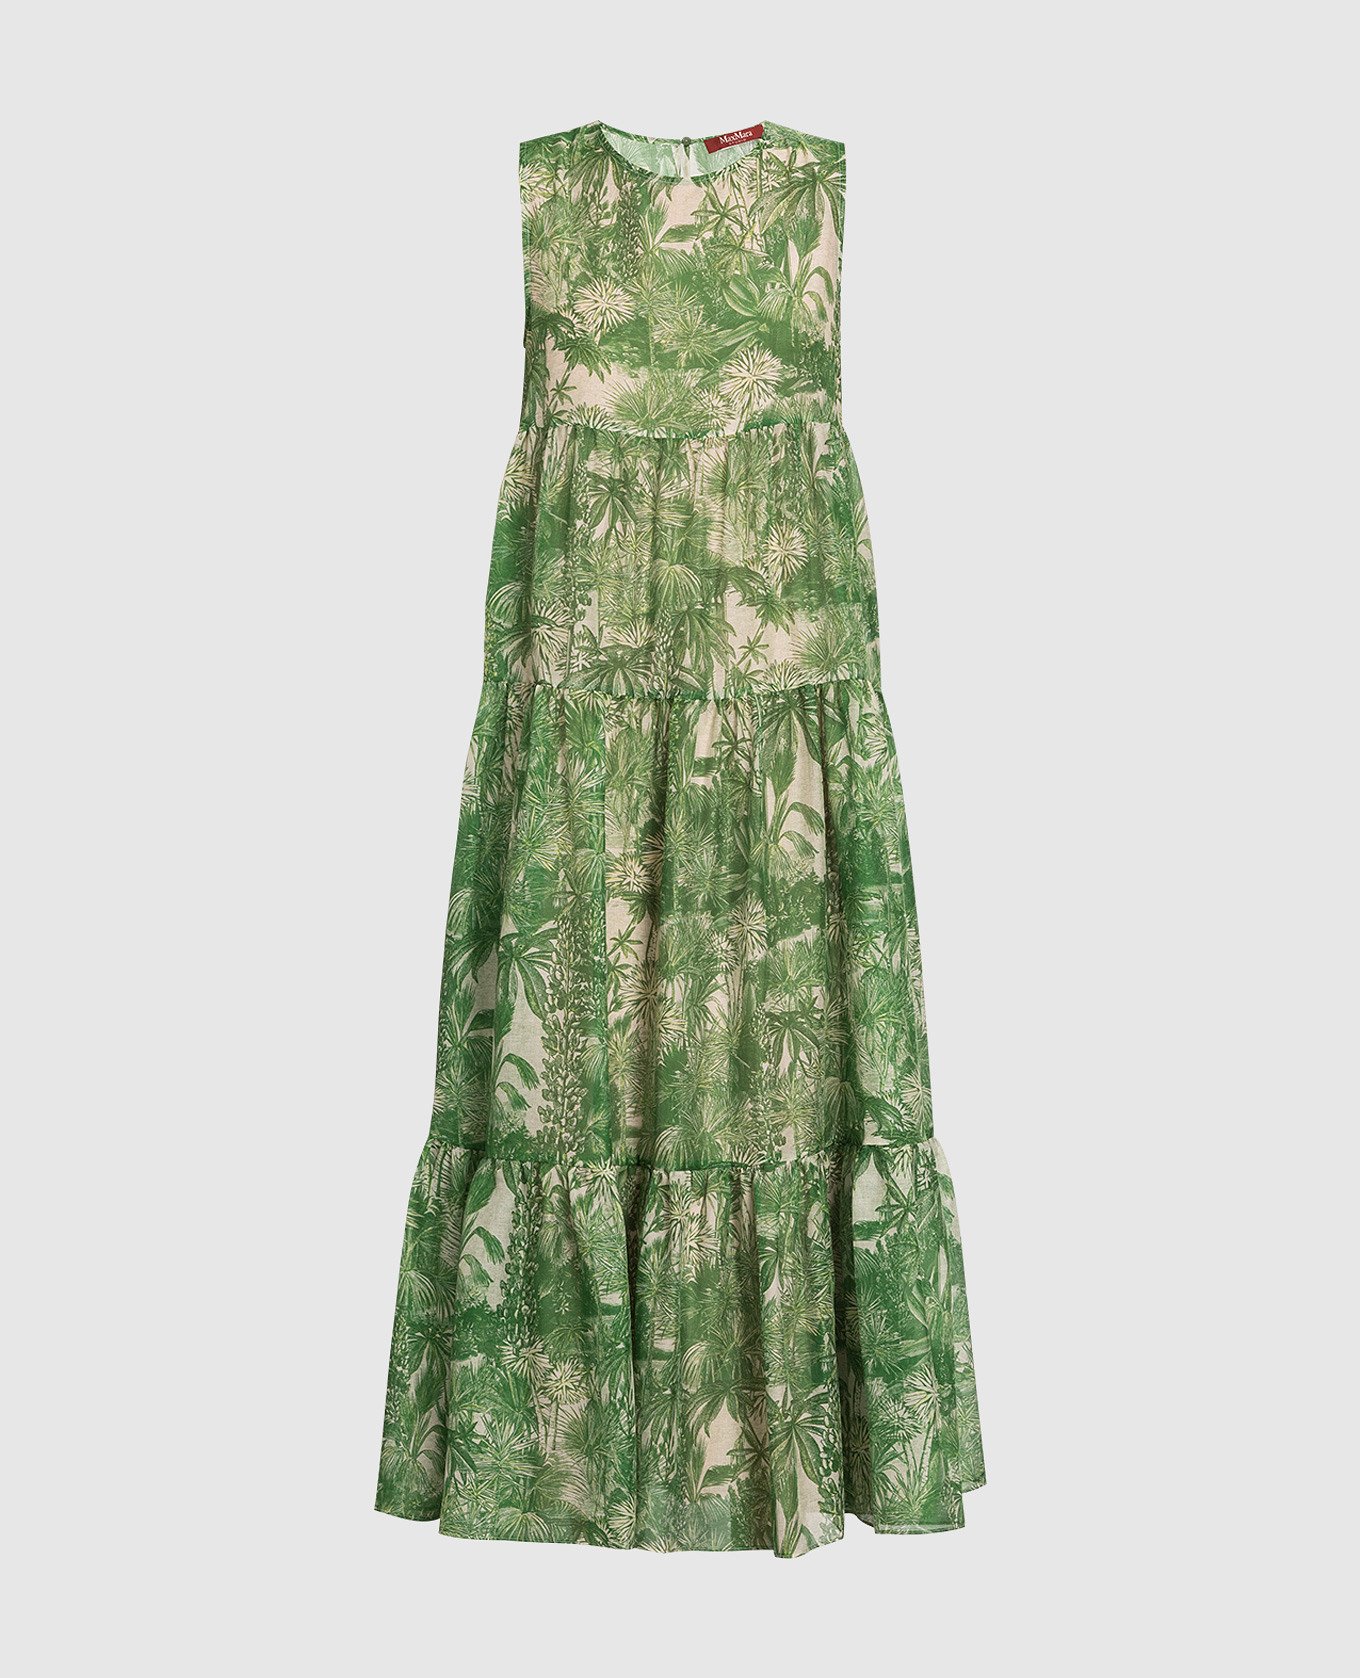 Foce green dress in floral print